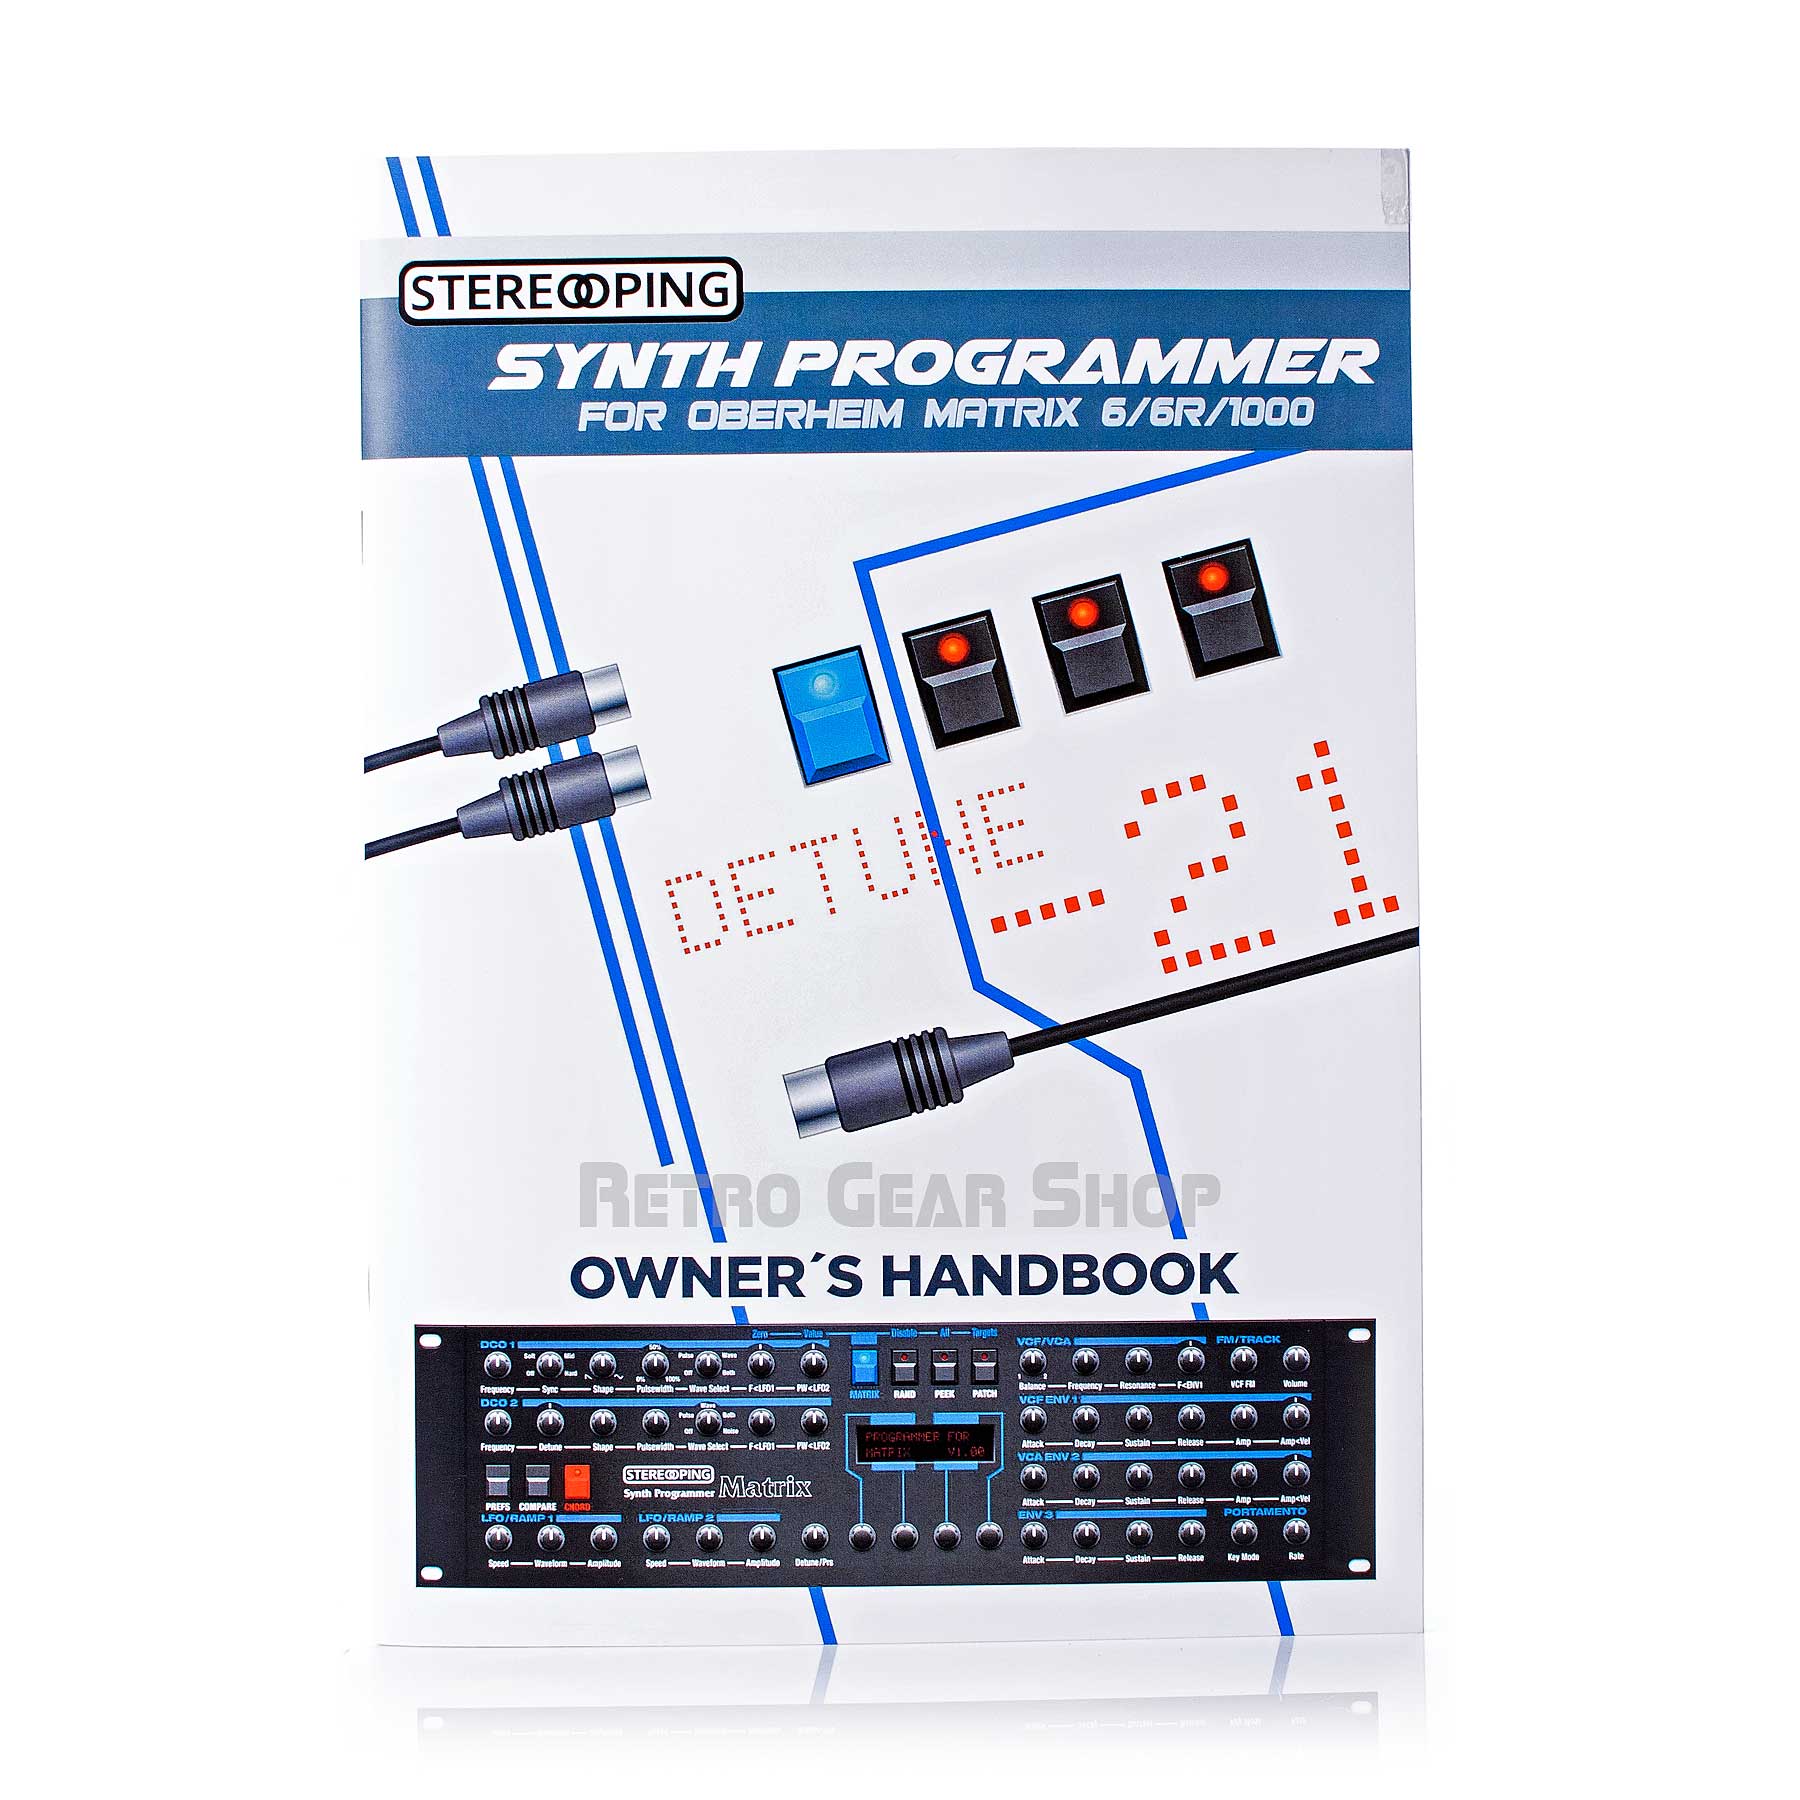 Stereoping Programmer DIY Kit User Manual